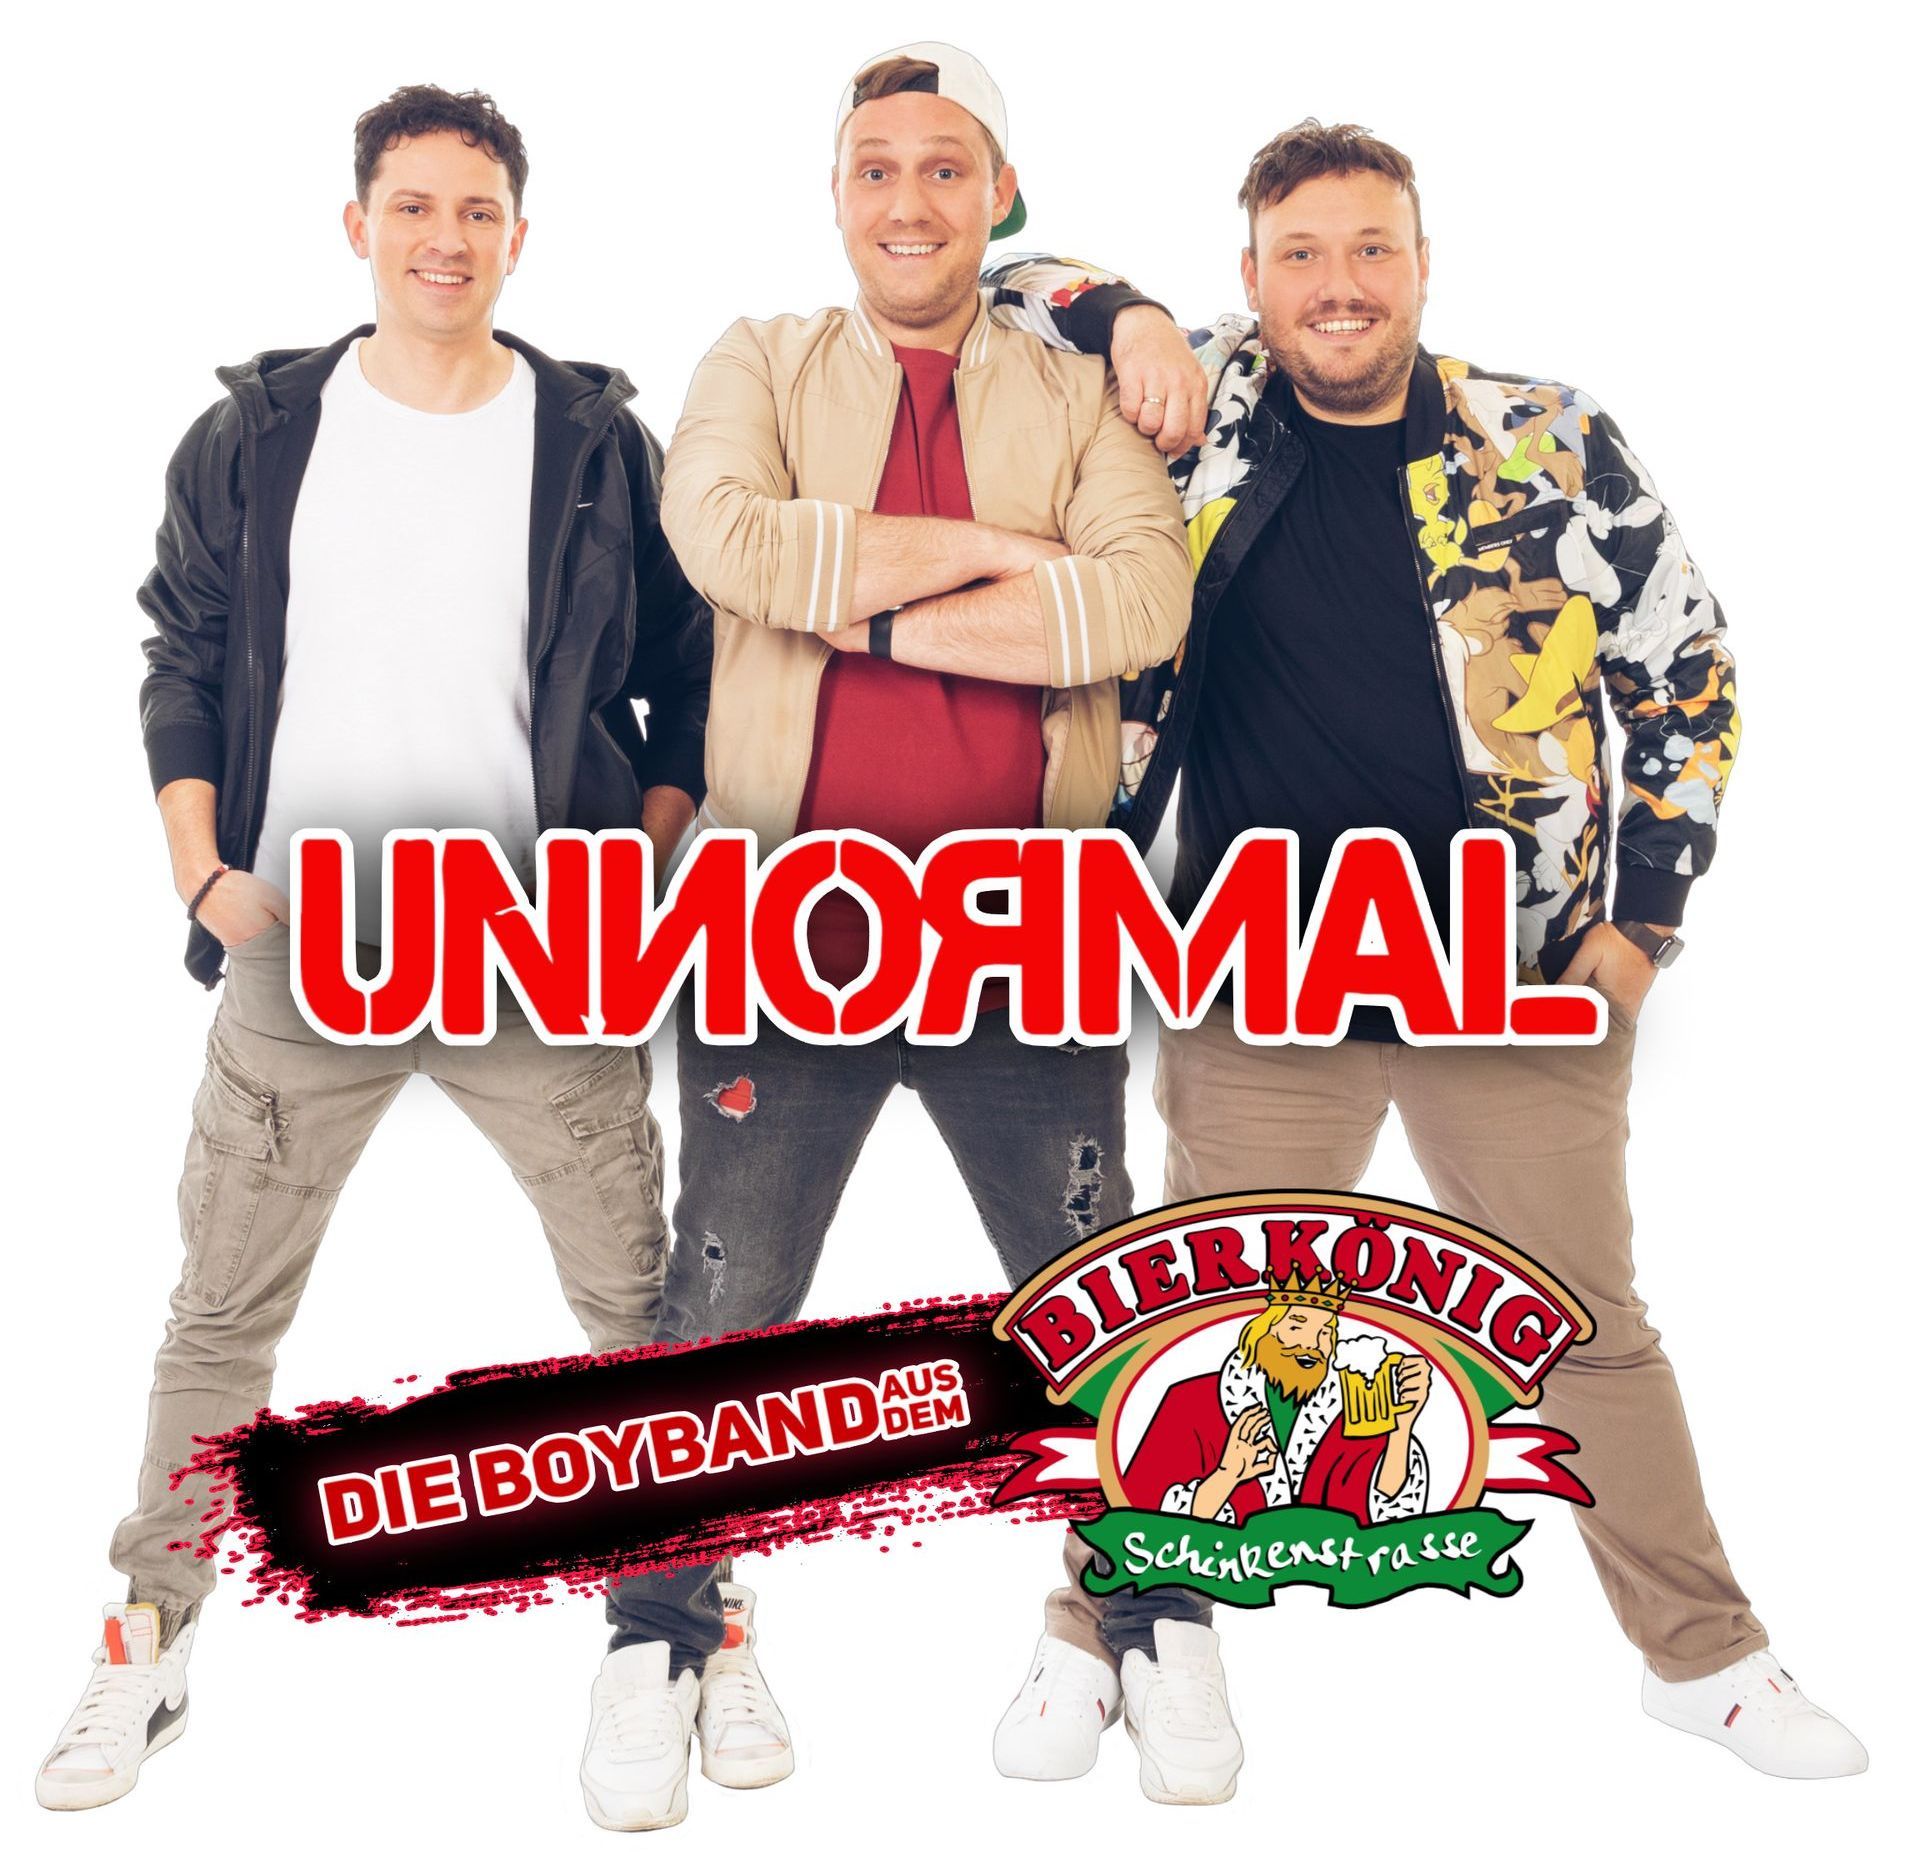 Die 3 Jungs von UNNORMAL ! fresh - cool - mallorcastyle - party - power